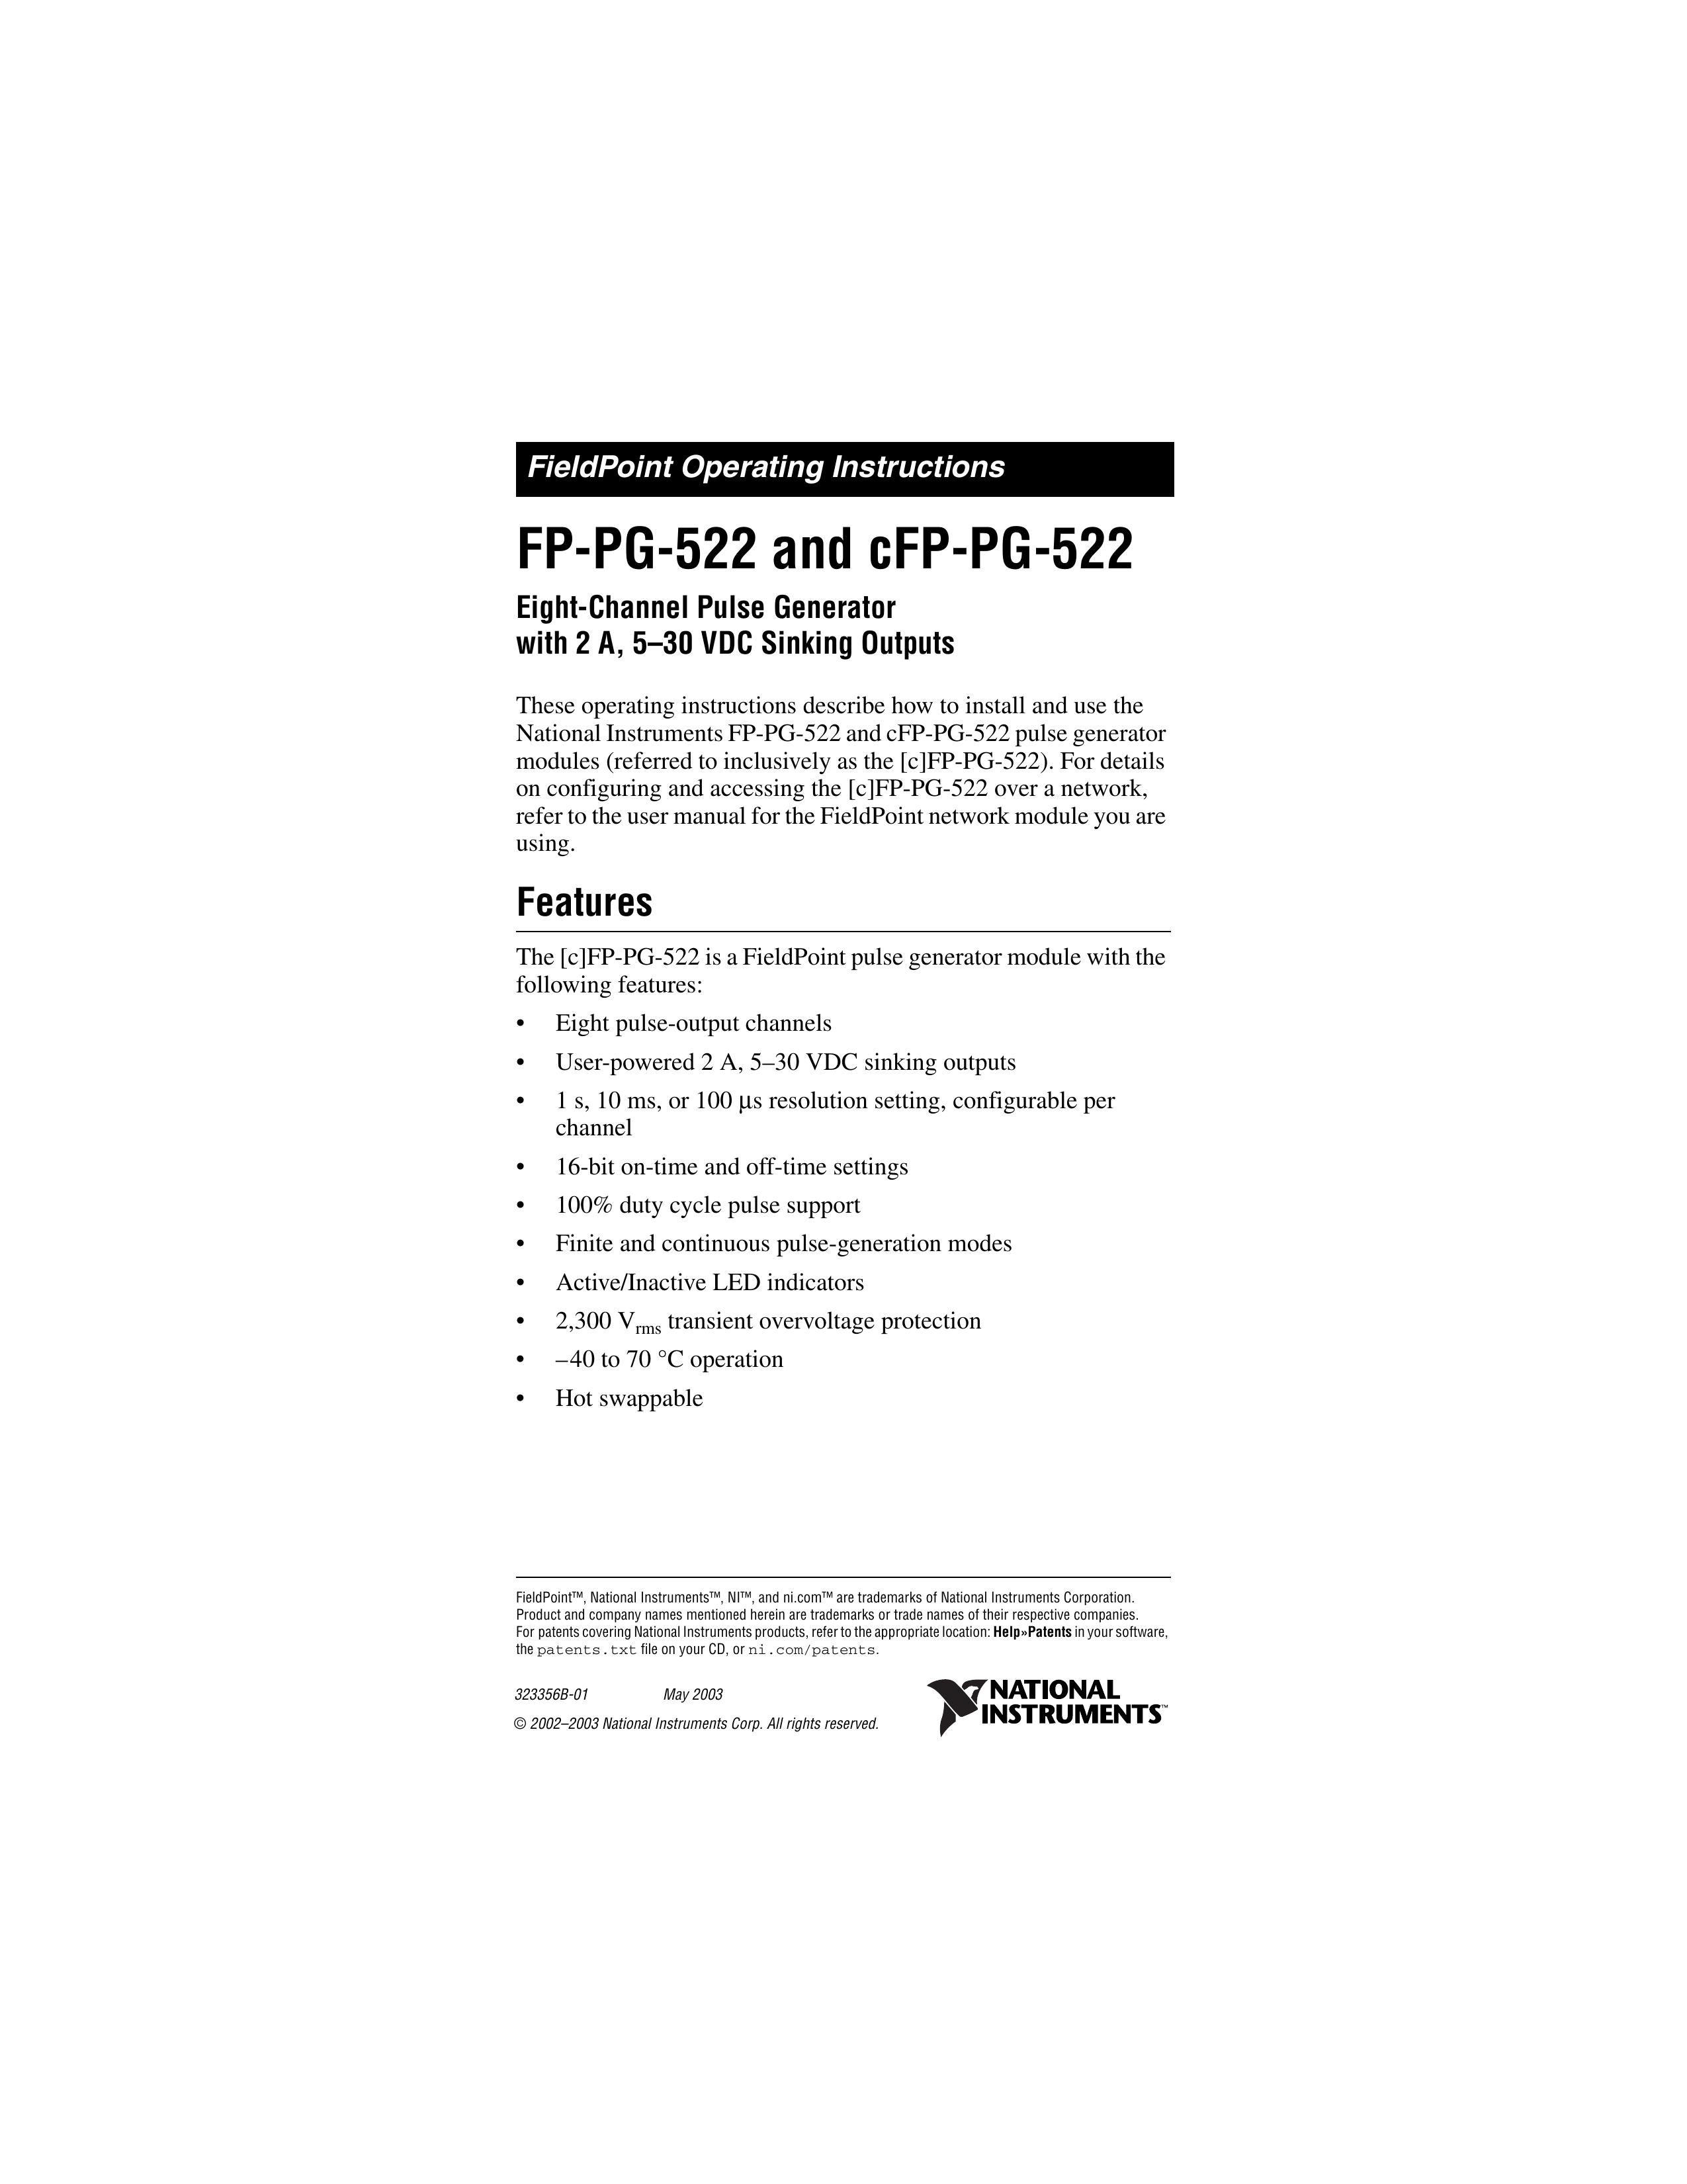 National Instruments cFP-PG-522 Blood Pressure Monitor User Manual